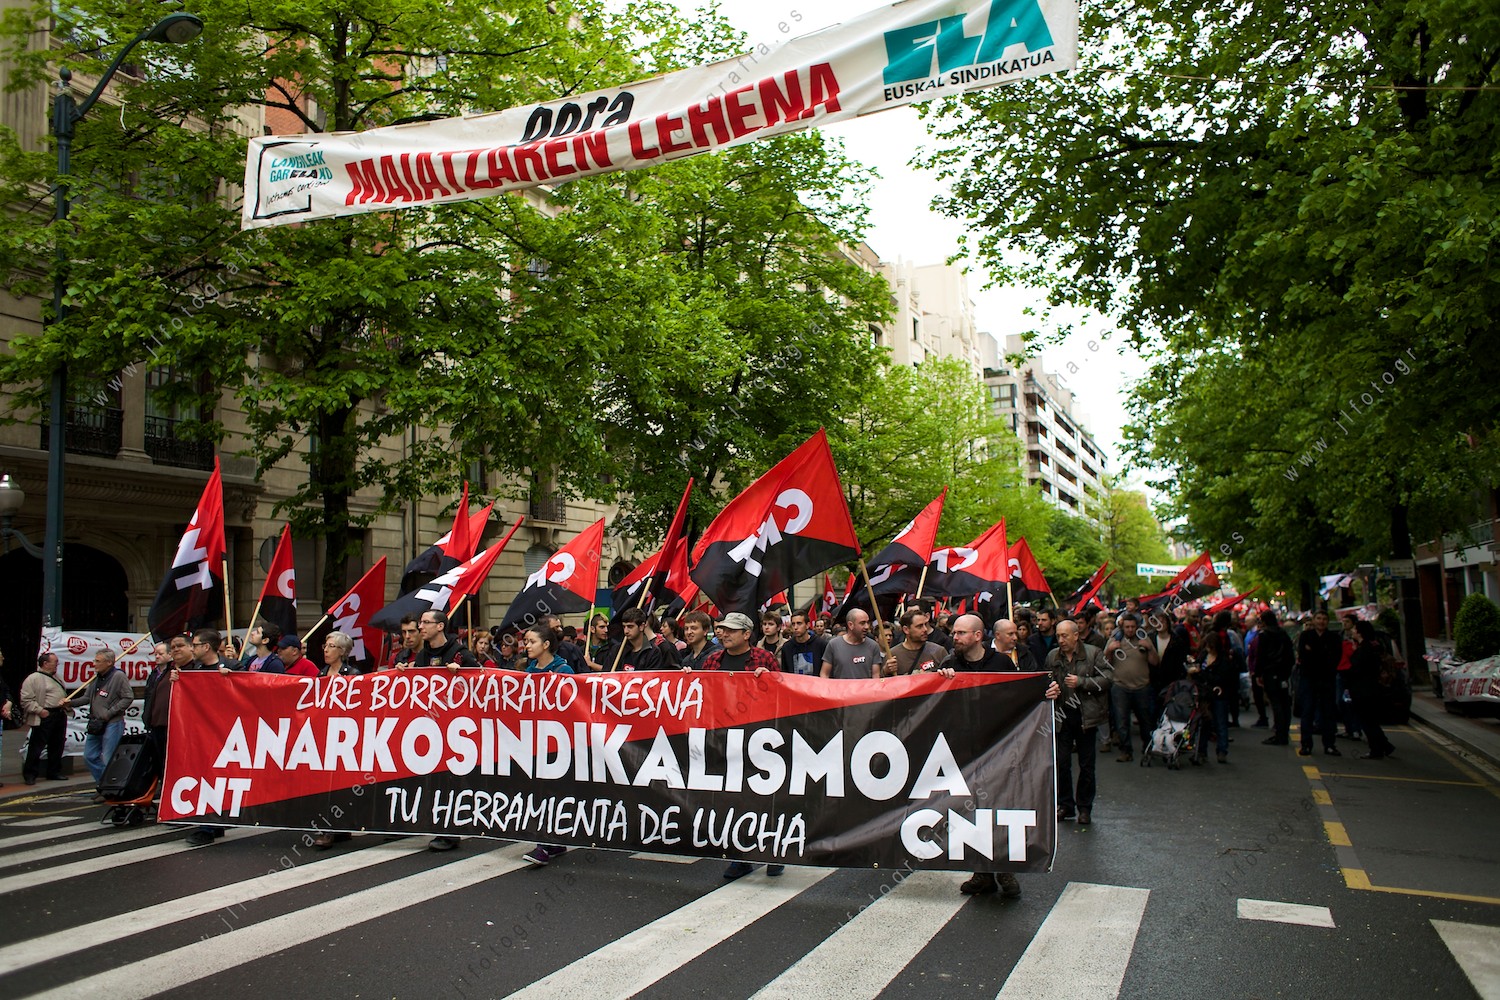 Anarkosindikalismoa, pancarta de la CNT en el día del trabajador, en Bilbao